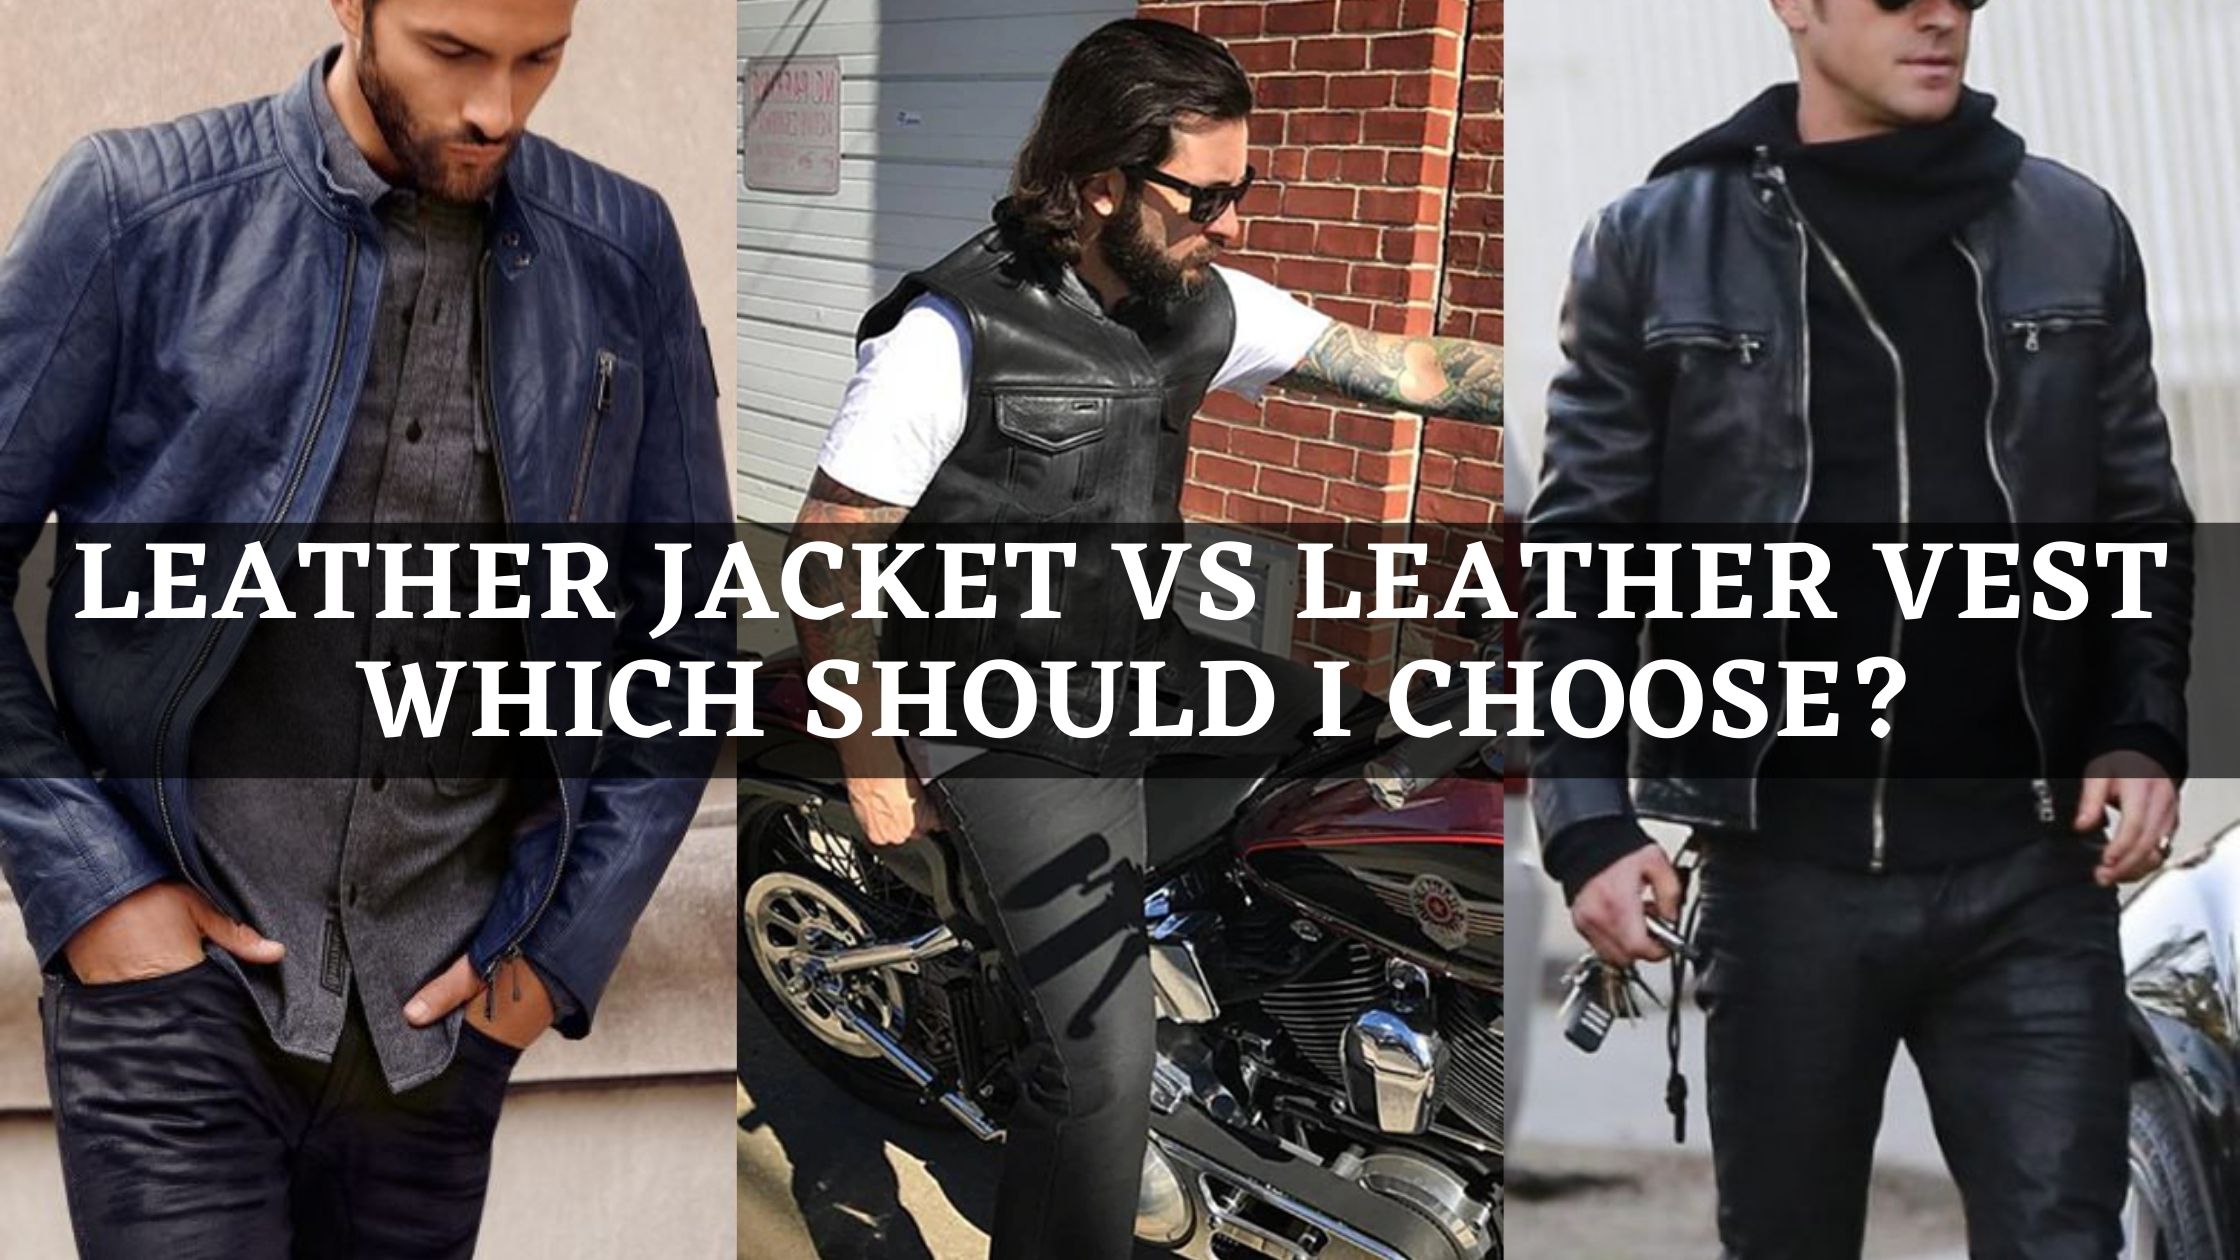 leather vest vs leather jacket